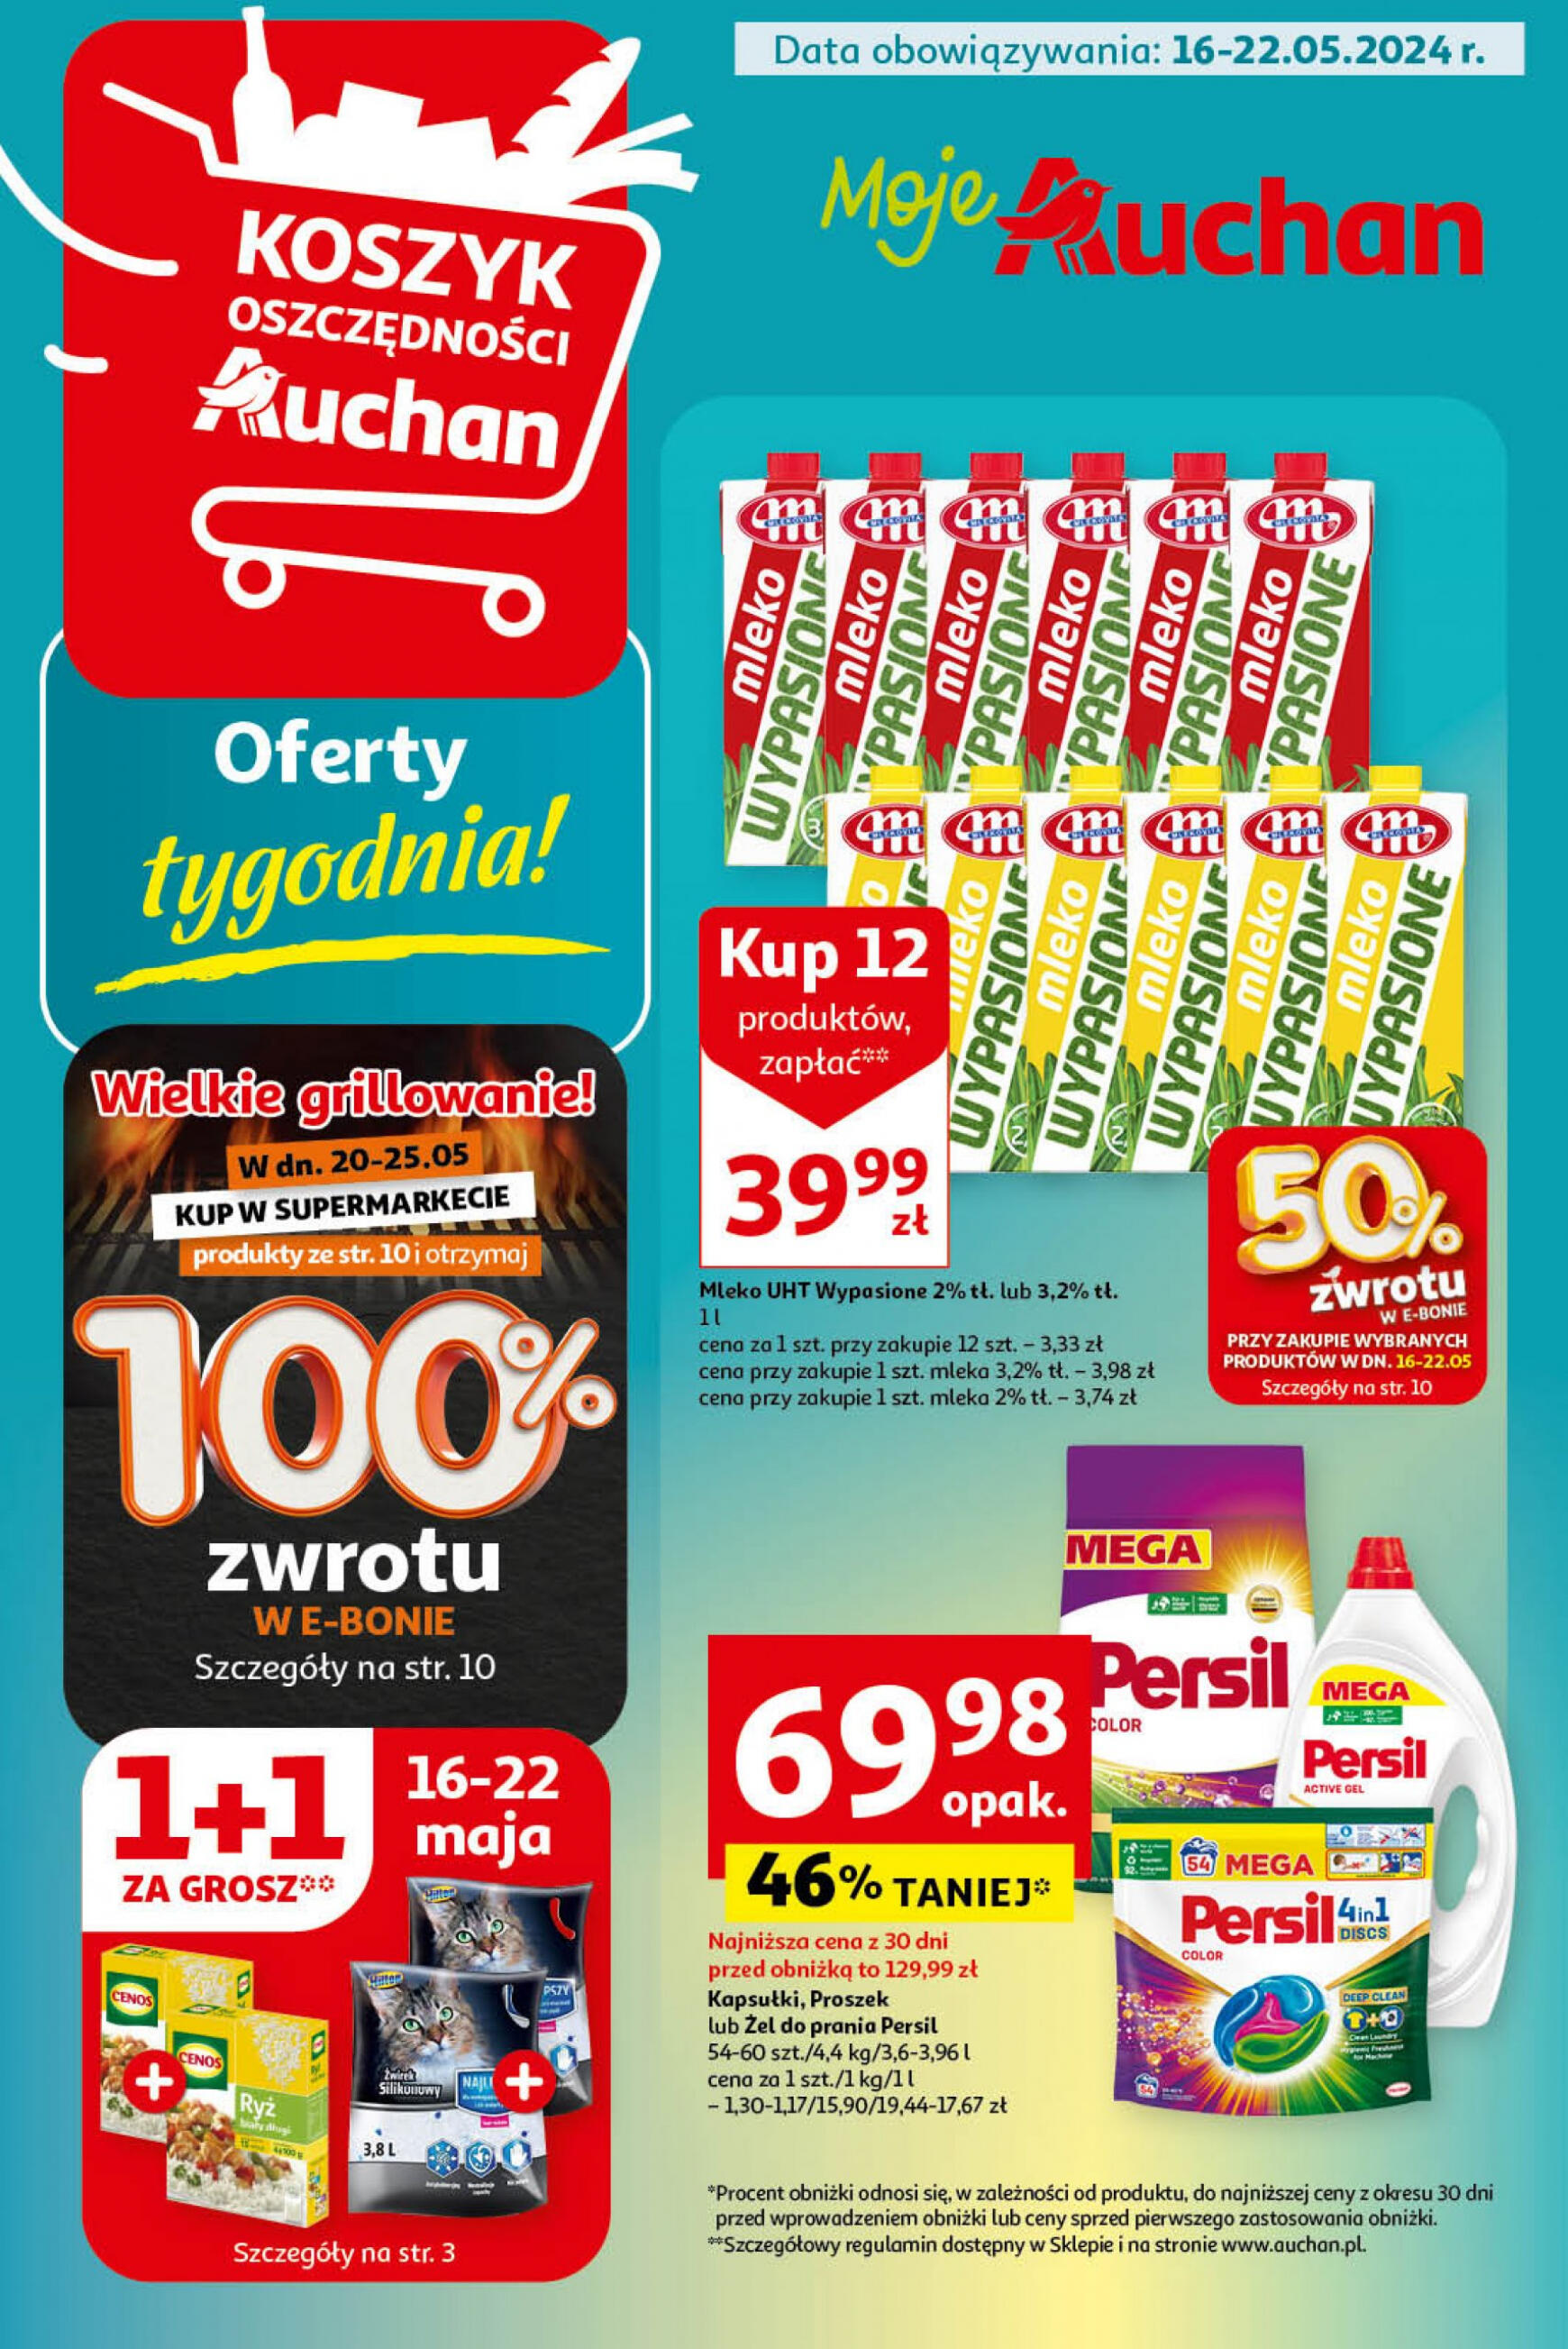 auchan - Moje Auchan gazetka aktualna ważna od 16.05. - 22.05.